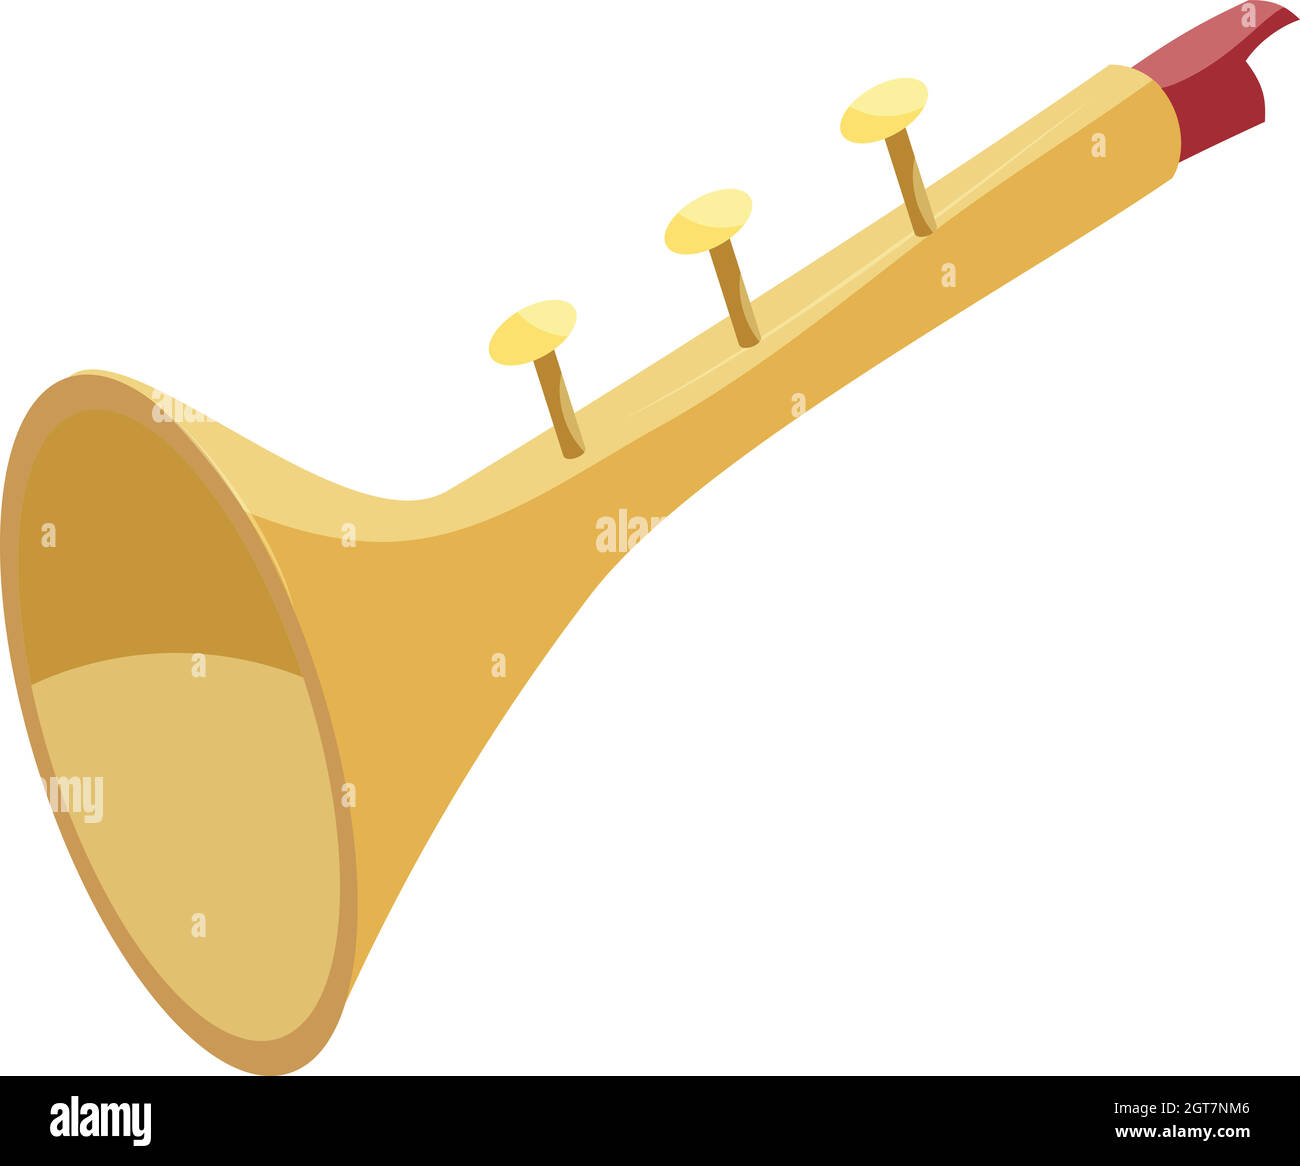 Toy trumpet icon, cartoon style Stock Vector